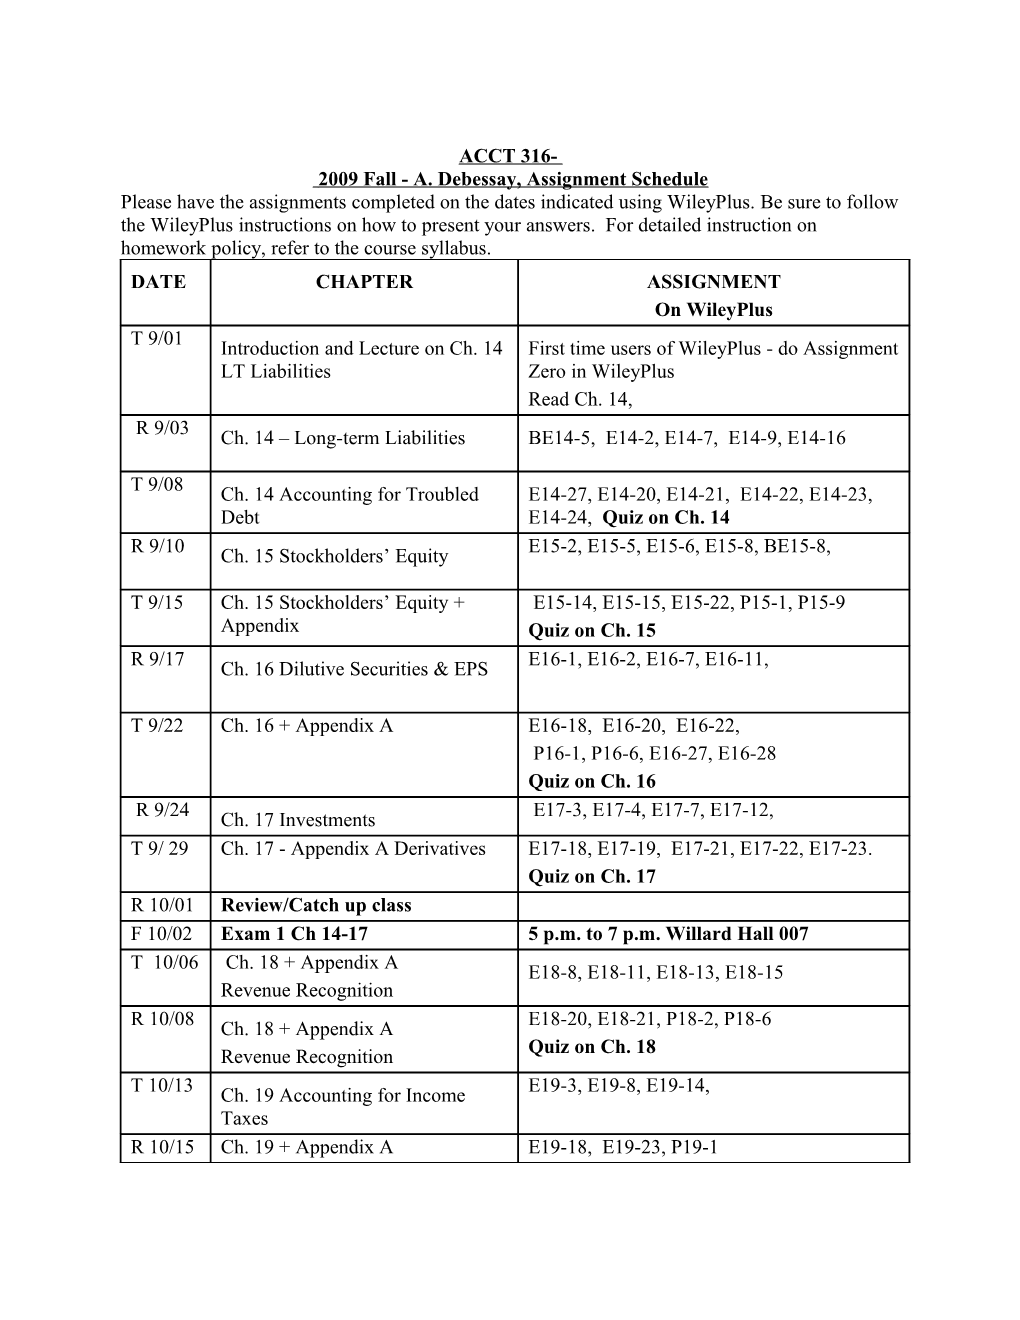 2009 Fall - A. Debessay, Assignment Schedule